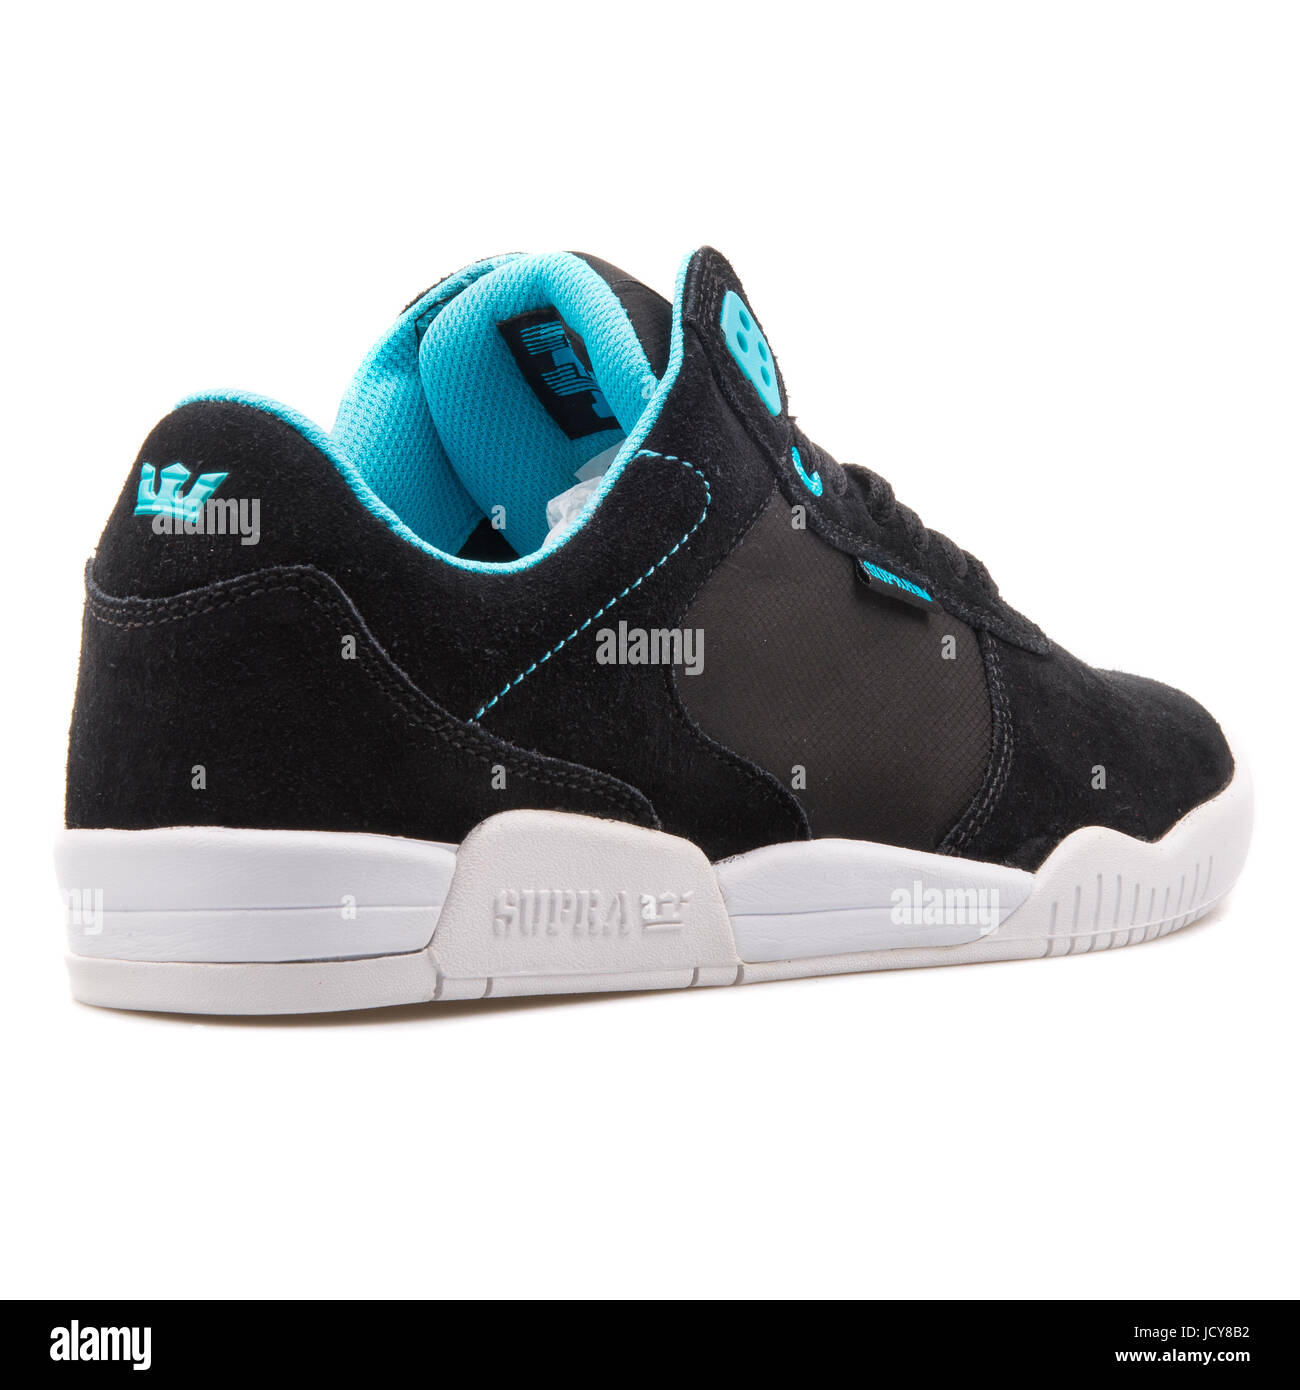 Supra Ellington Black and Blue Men's Sports Shoes - S73027 Stock Photo -  Alamy